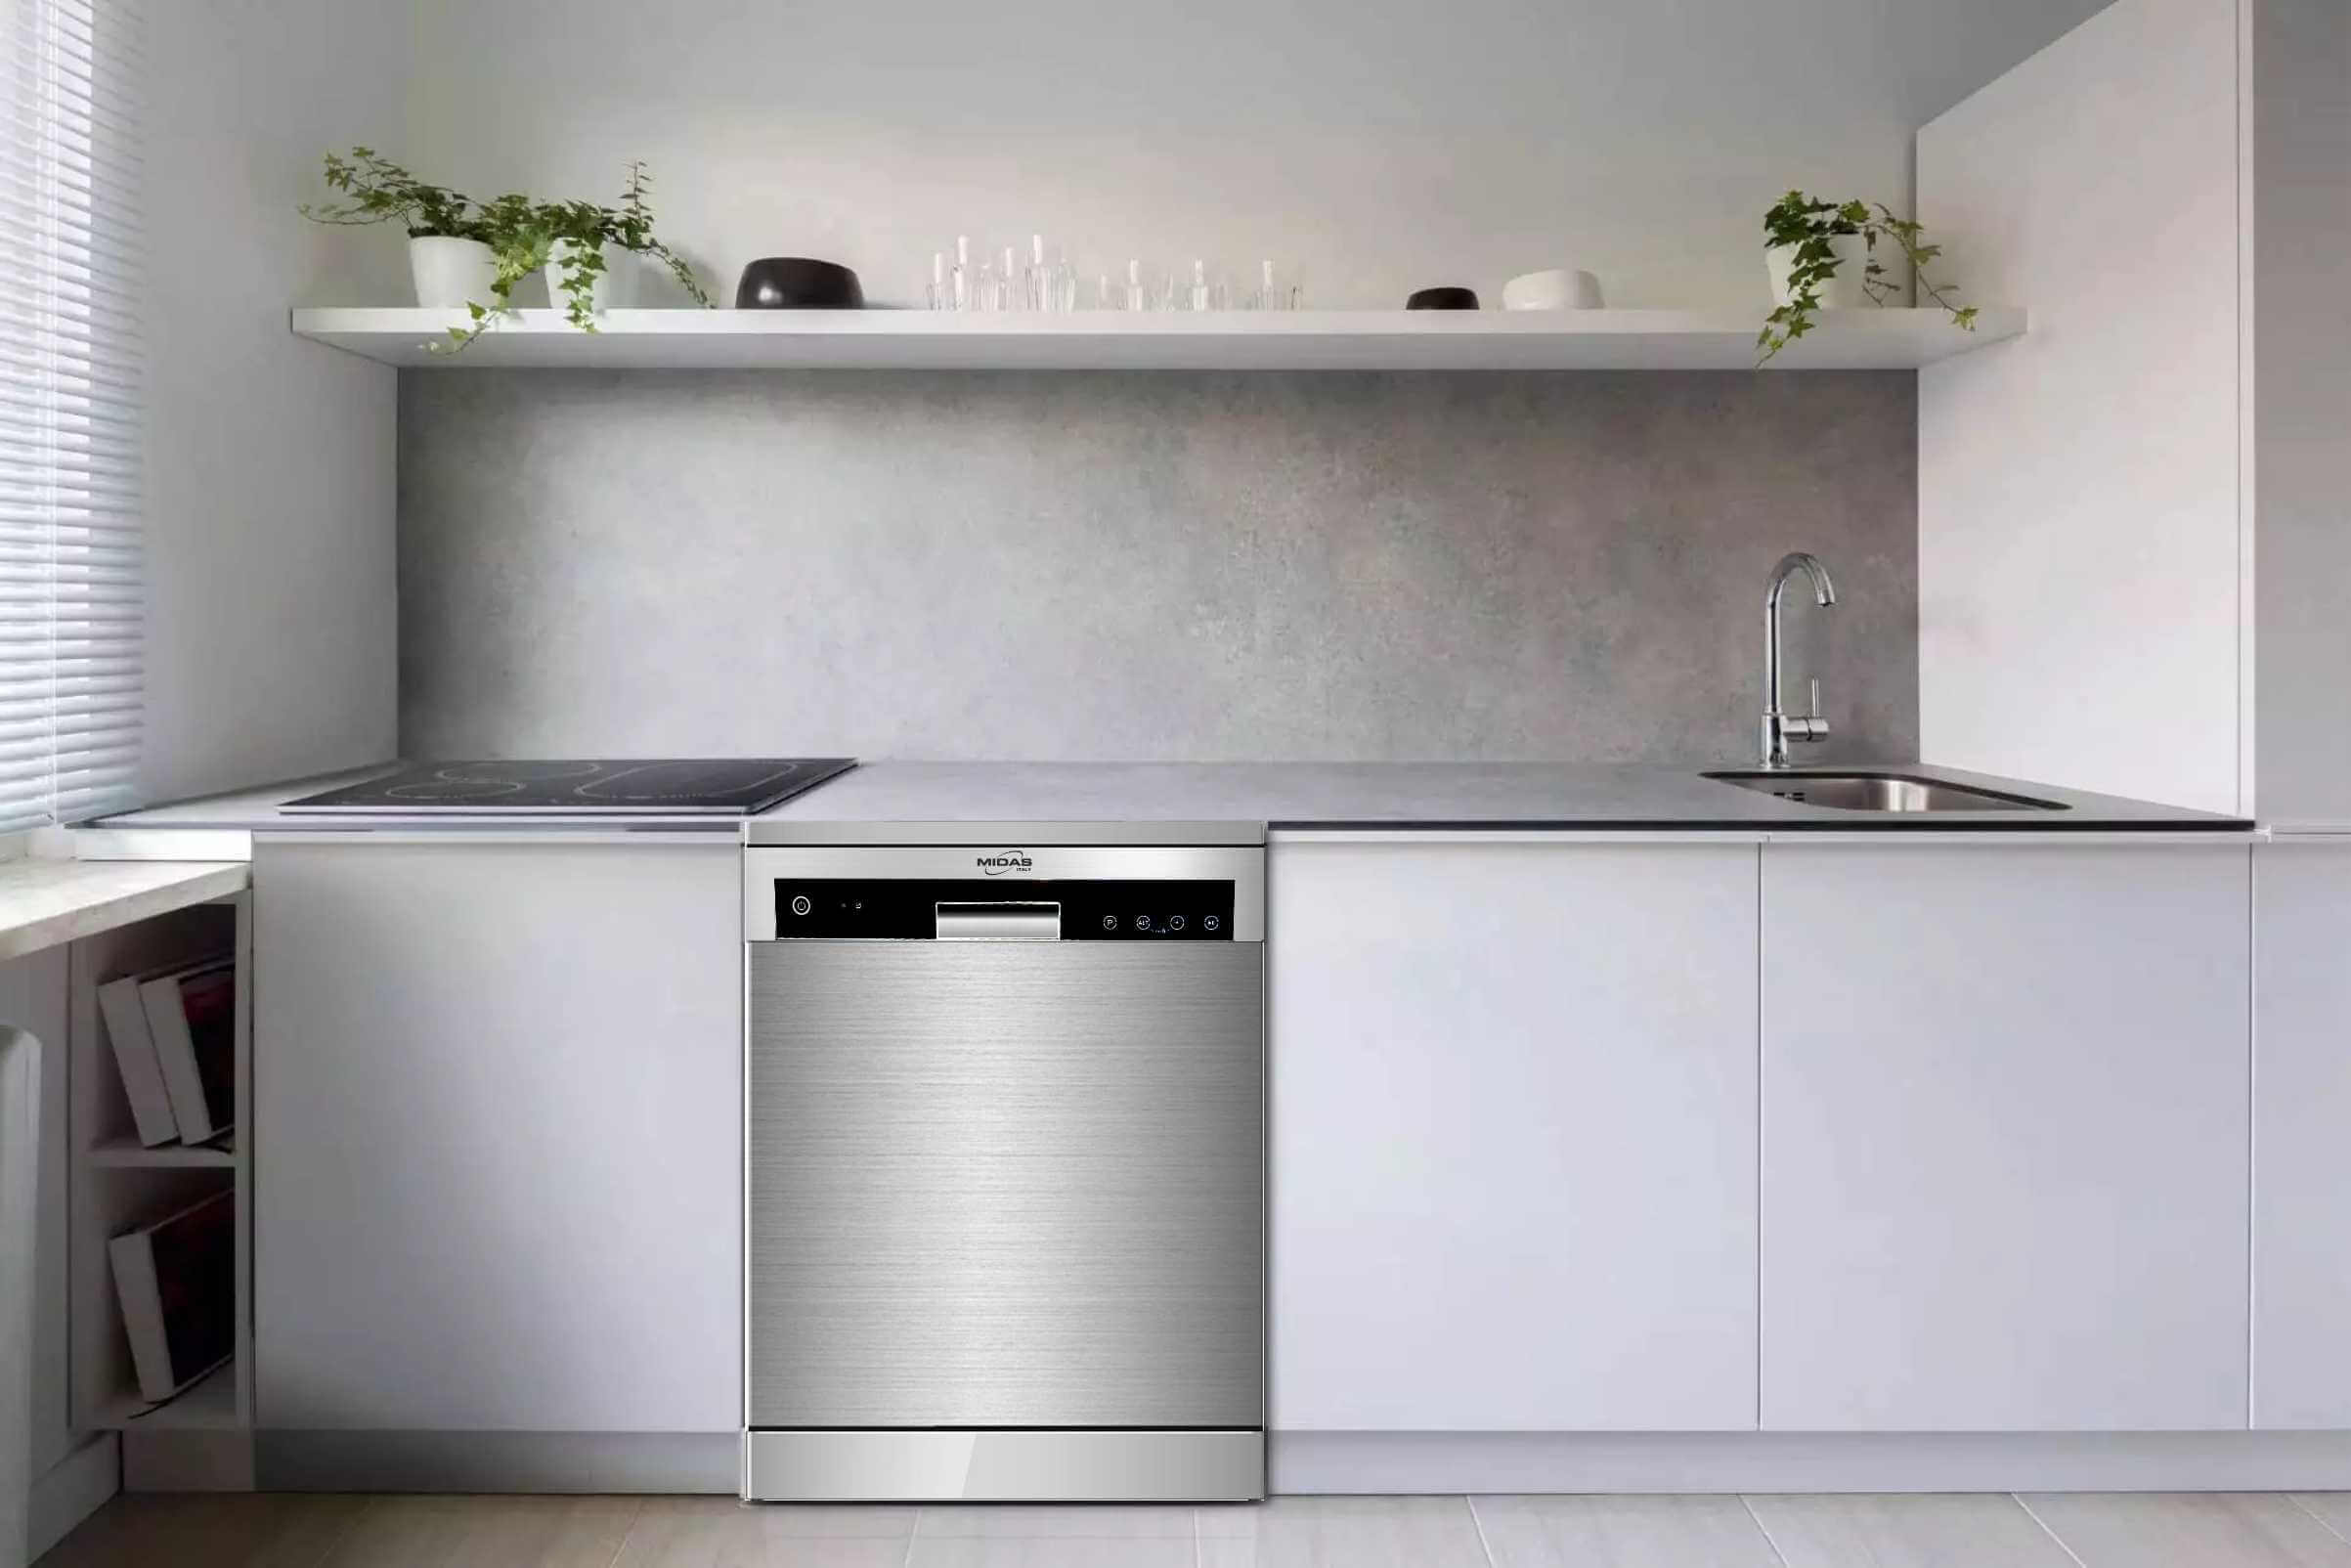 Smeta stainless steel free standing dishwasher